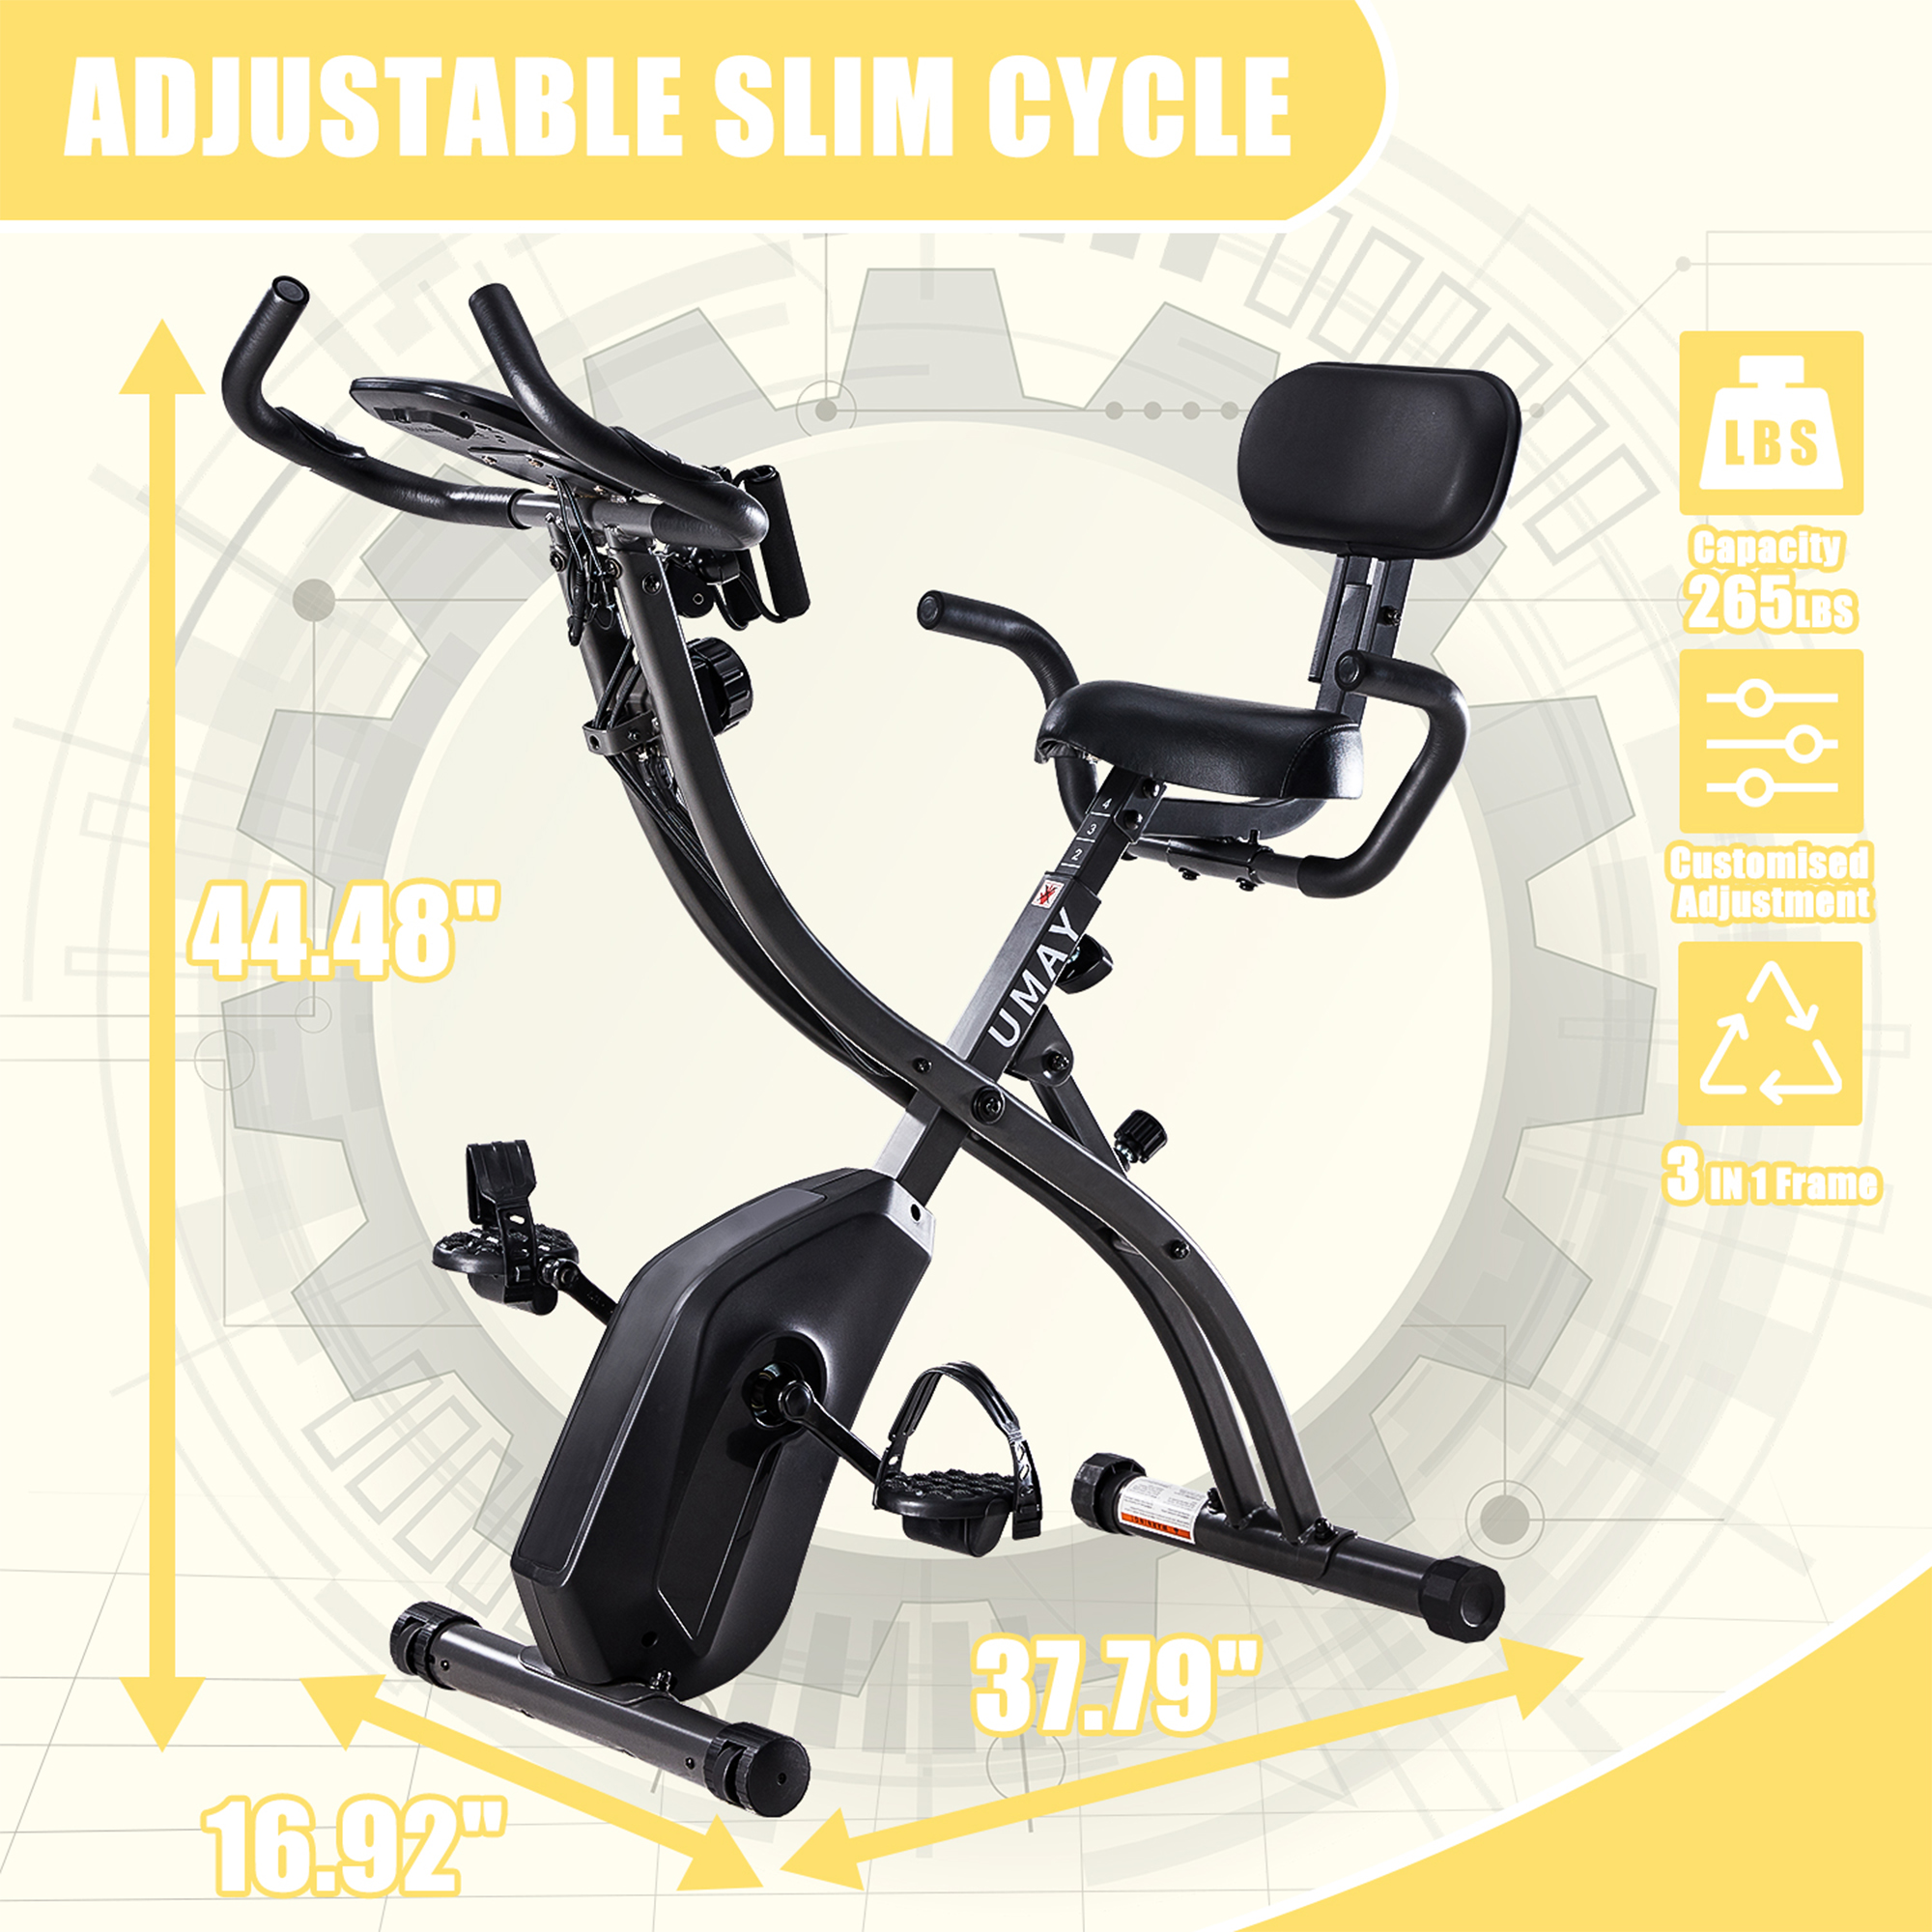 Buy Slim Cycle, Exercise Bike, Home Gym